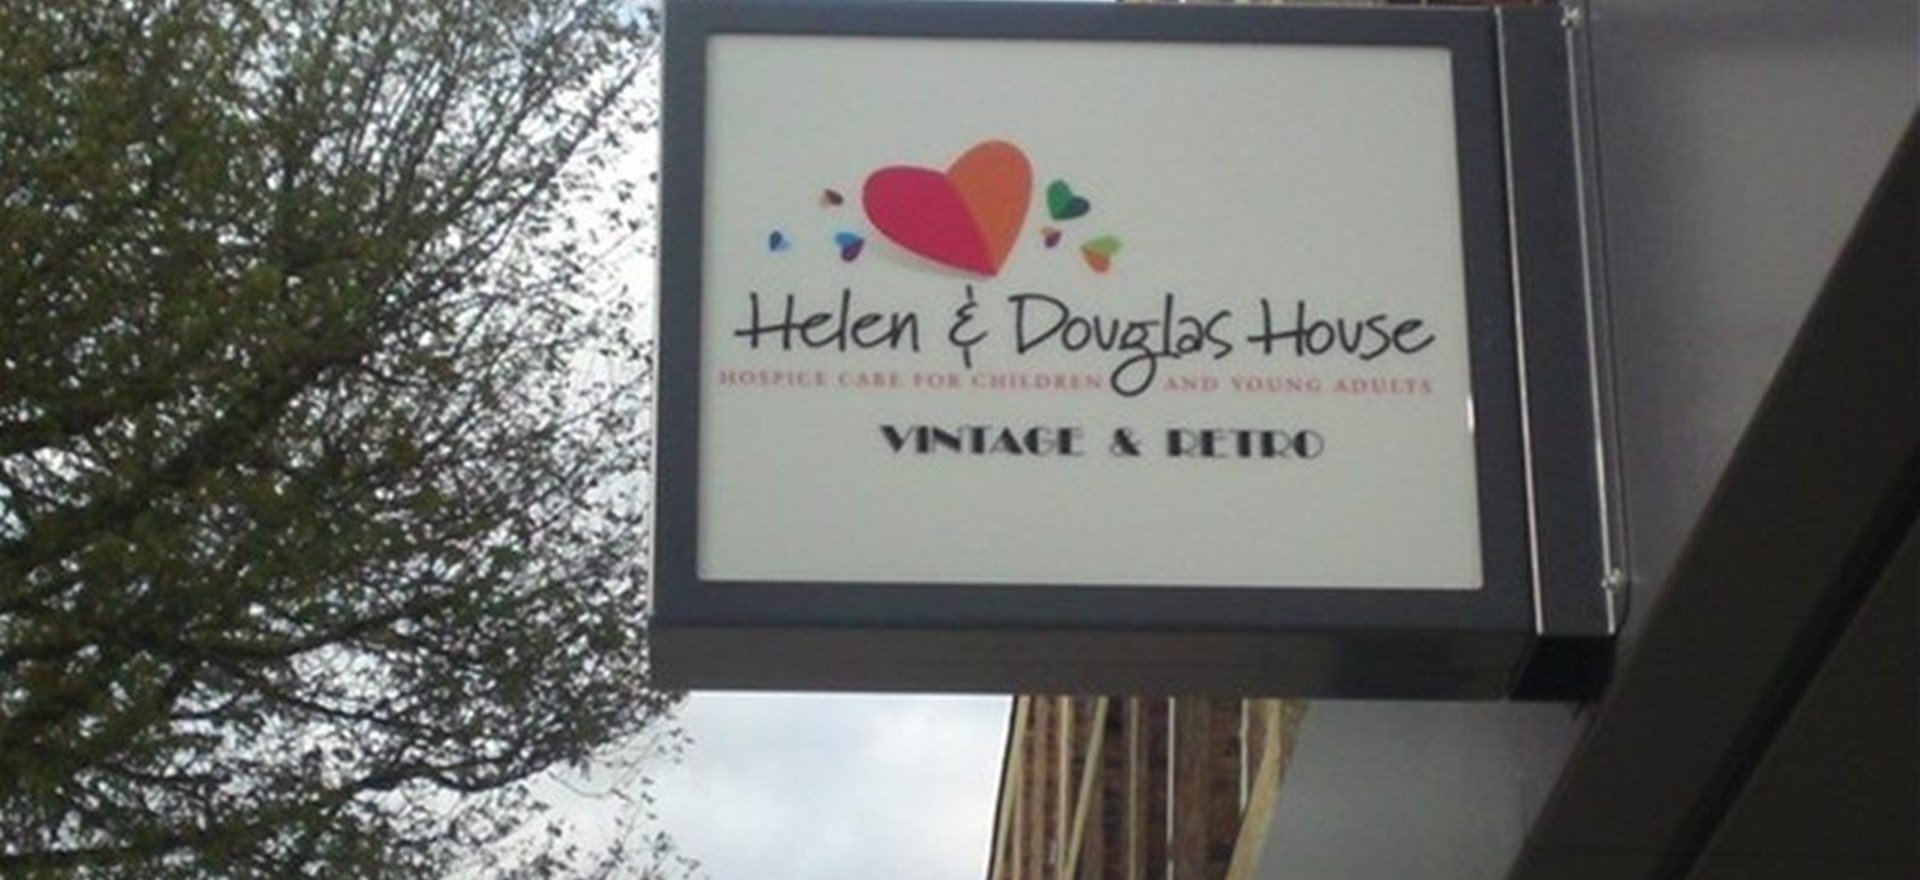 Helen & Douglas House External Shop Signage Oxford